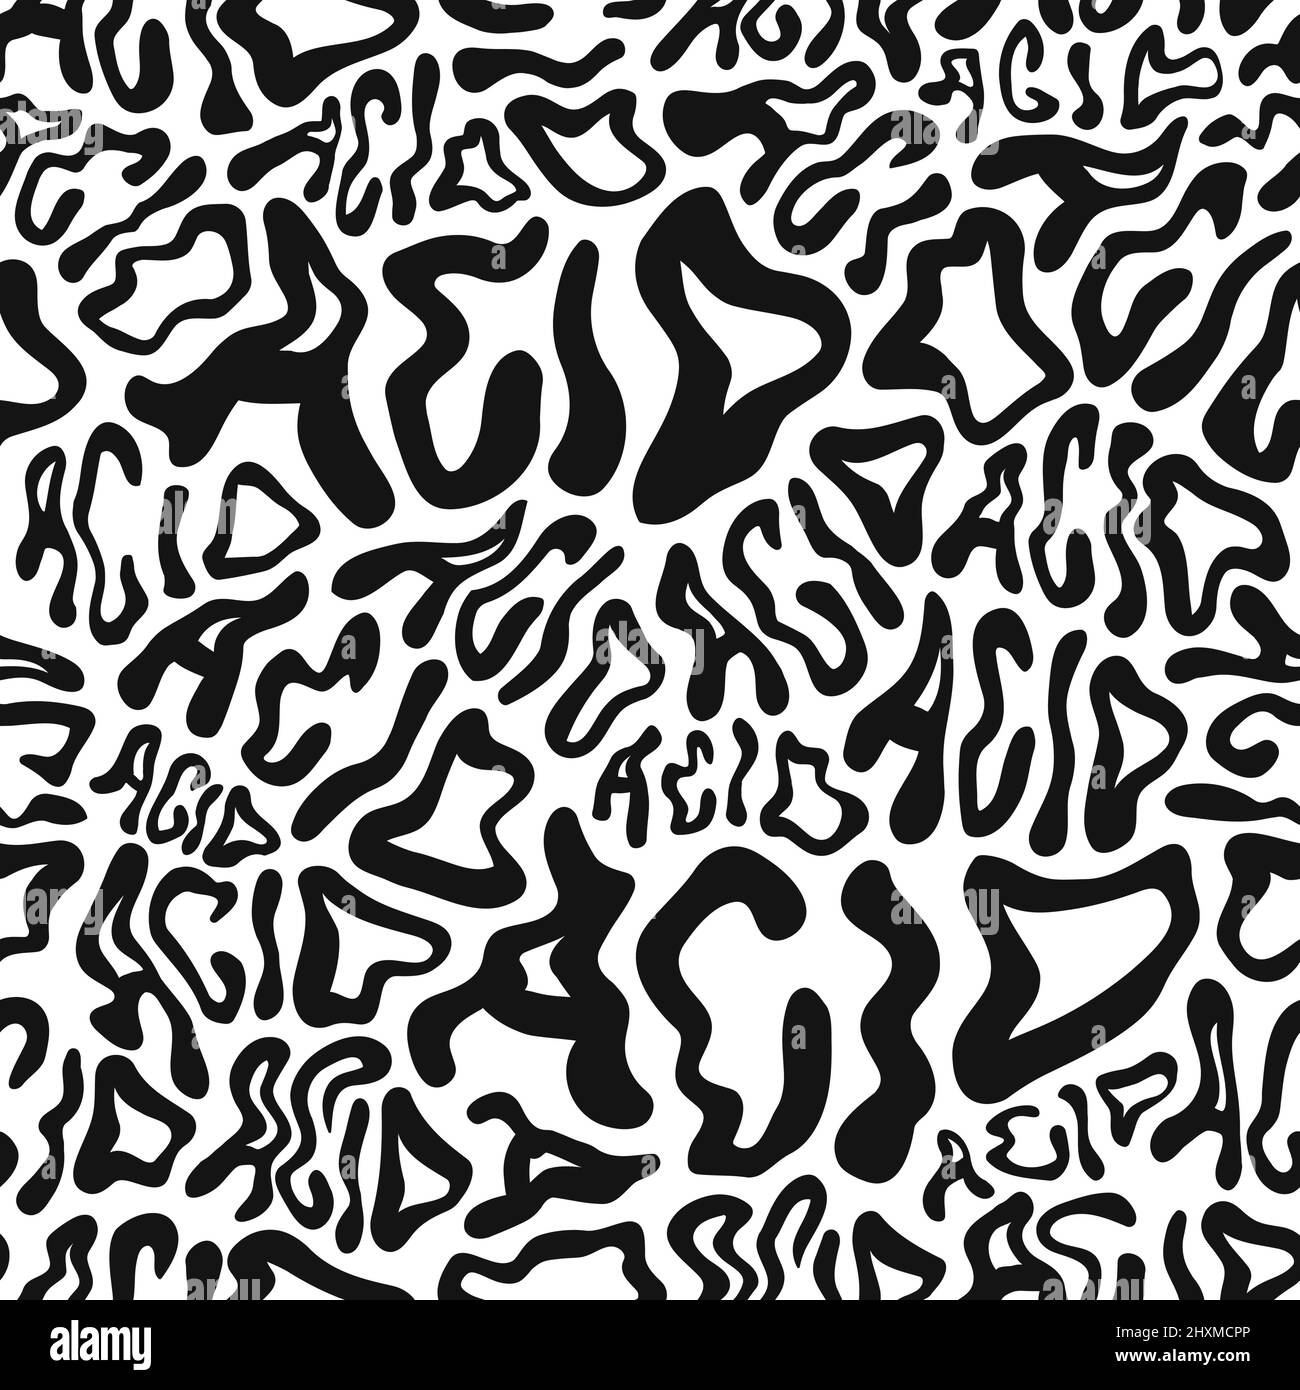 Deformierte gewellte Säure Wort nahtlose Muster Wallpaper.Vector Grafik Charakter Illustration.LSD, surreal, Säure, trippy Schriftzug nahtlose Muster Tapete Print-Konzept Stock Vektor